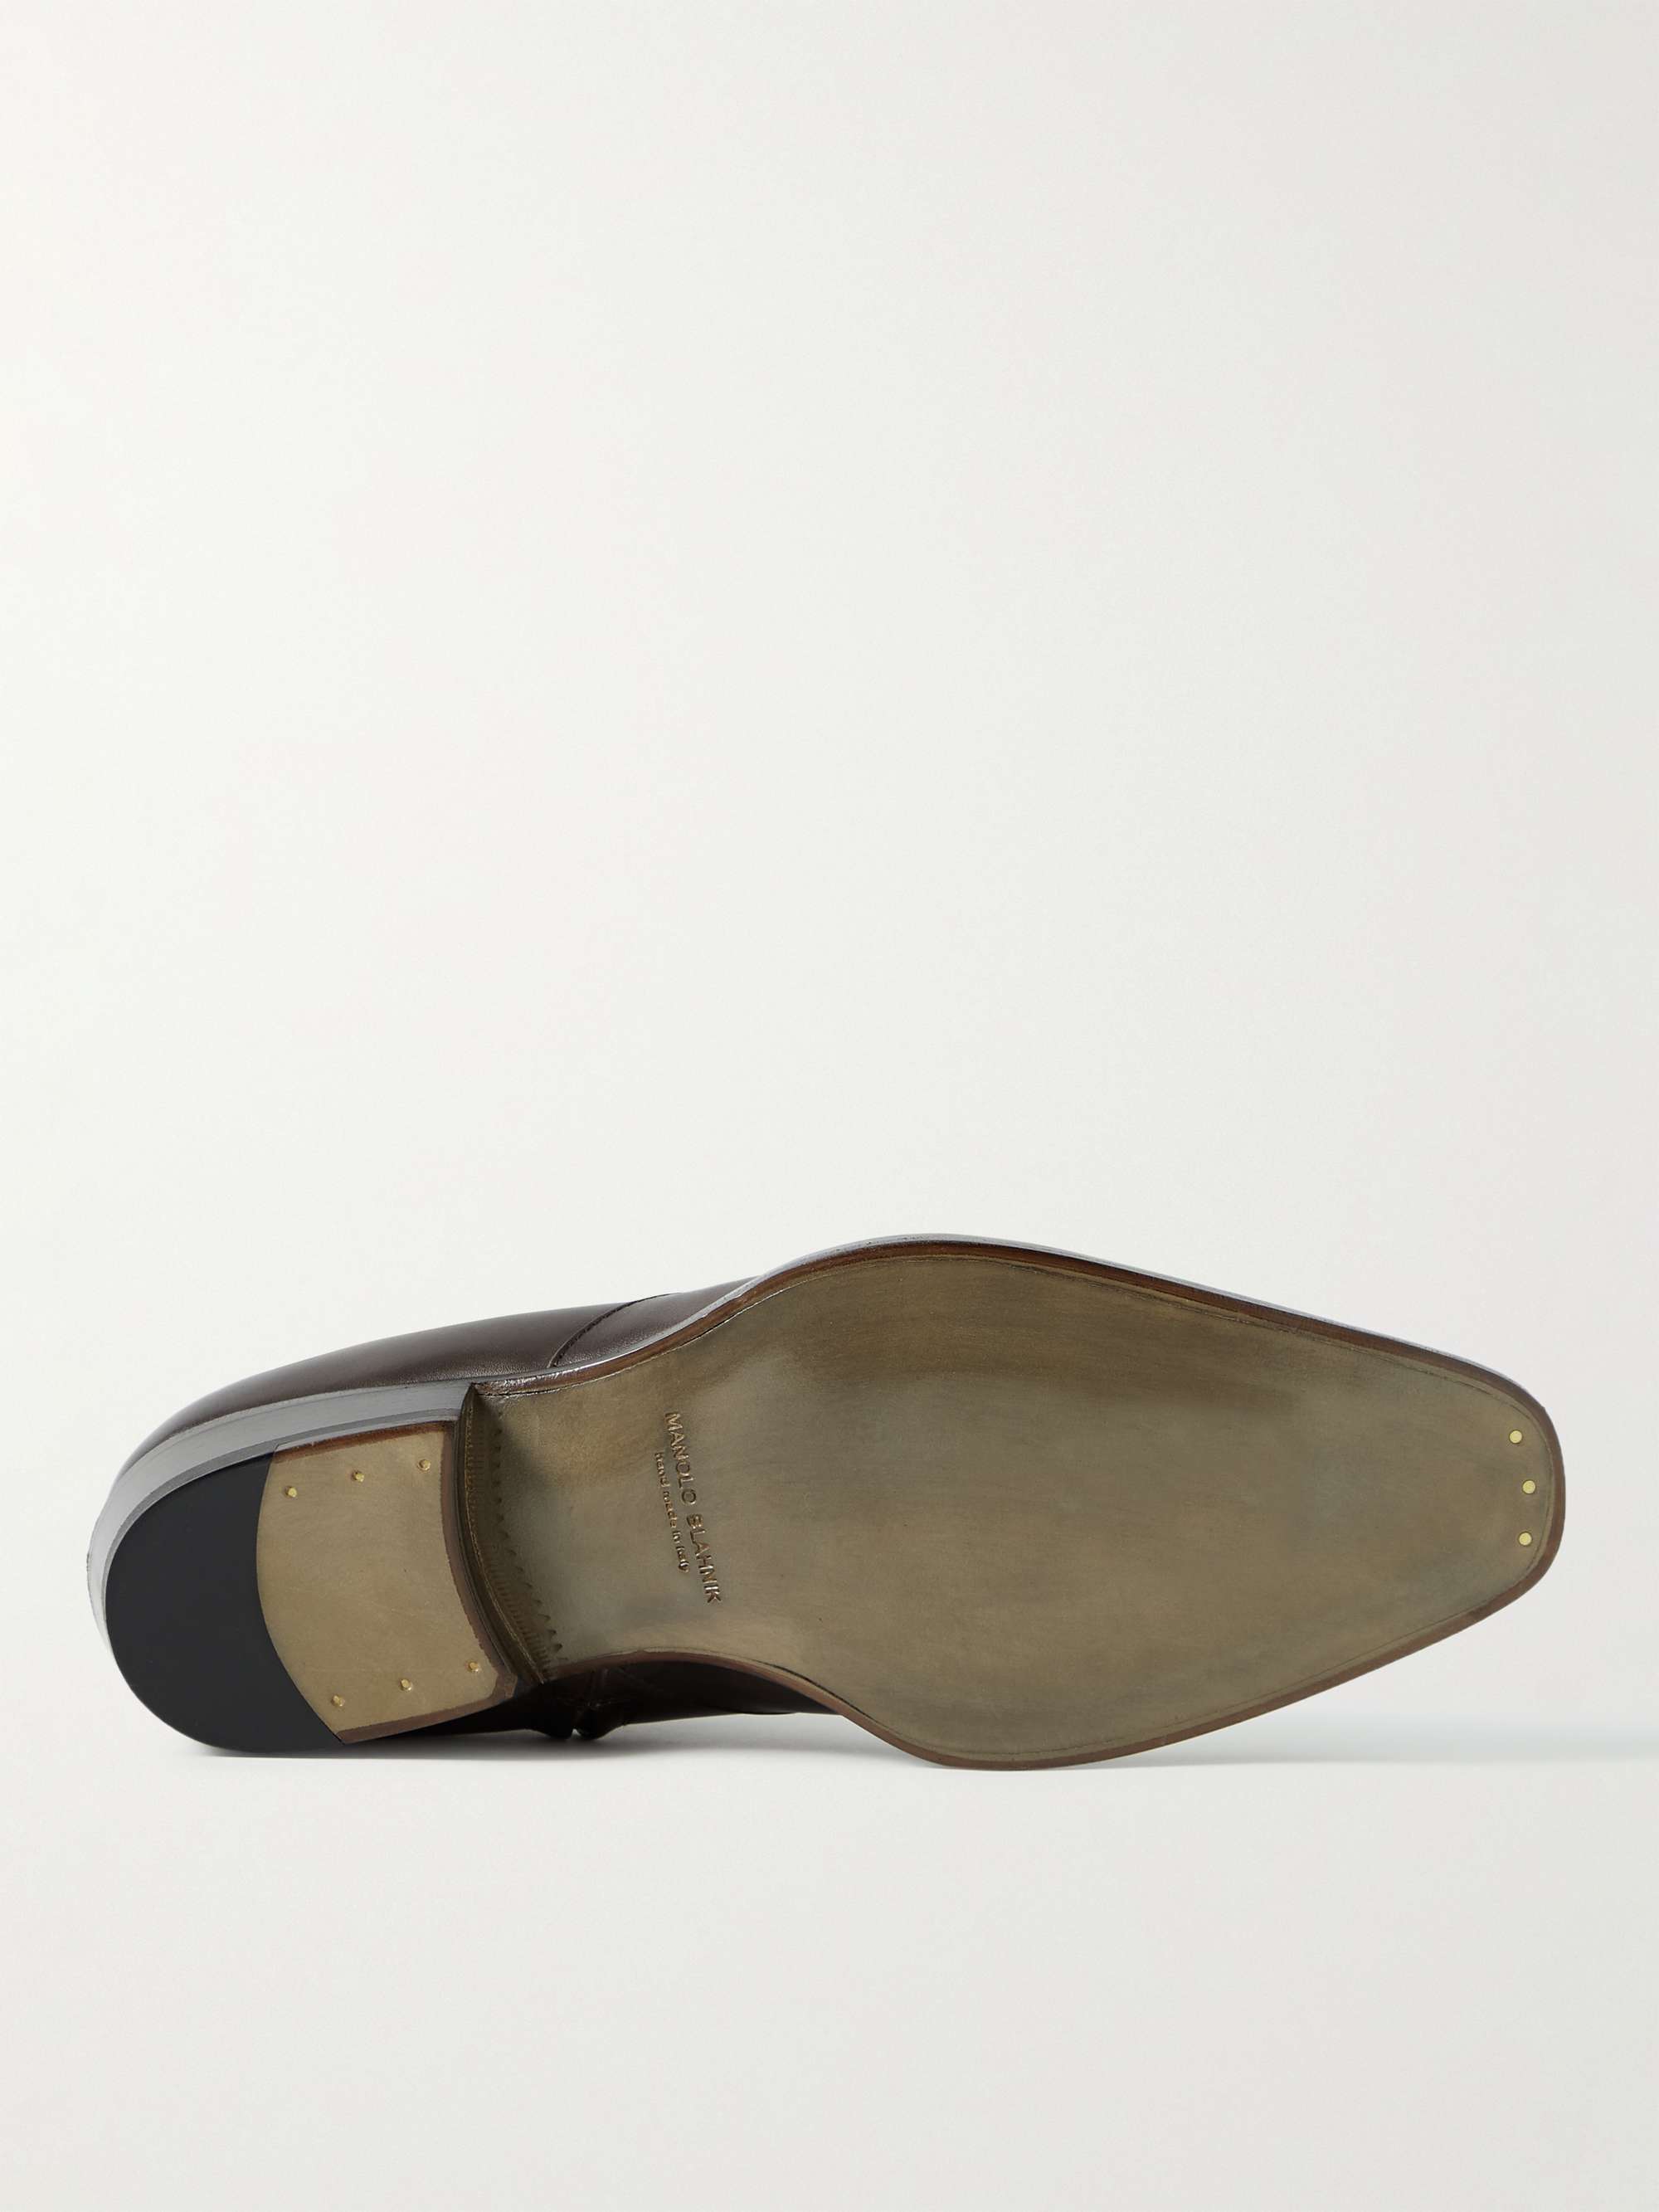 MANOLO BLAHNIK Sloane Leather Boots